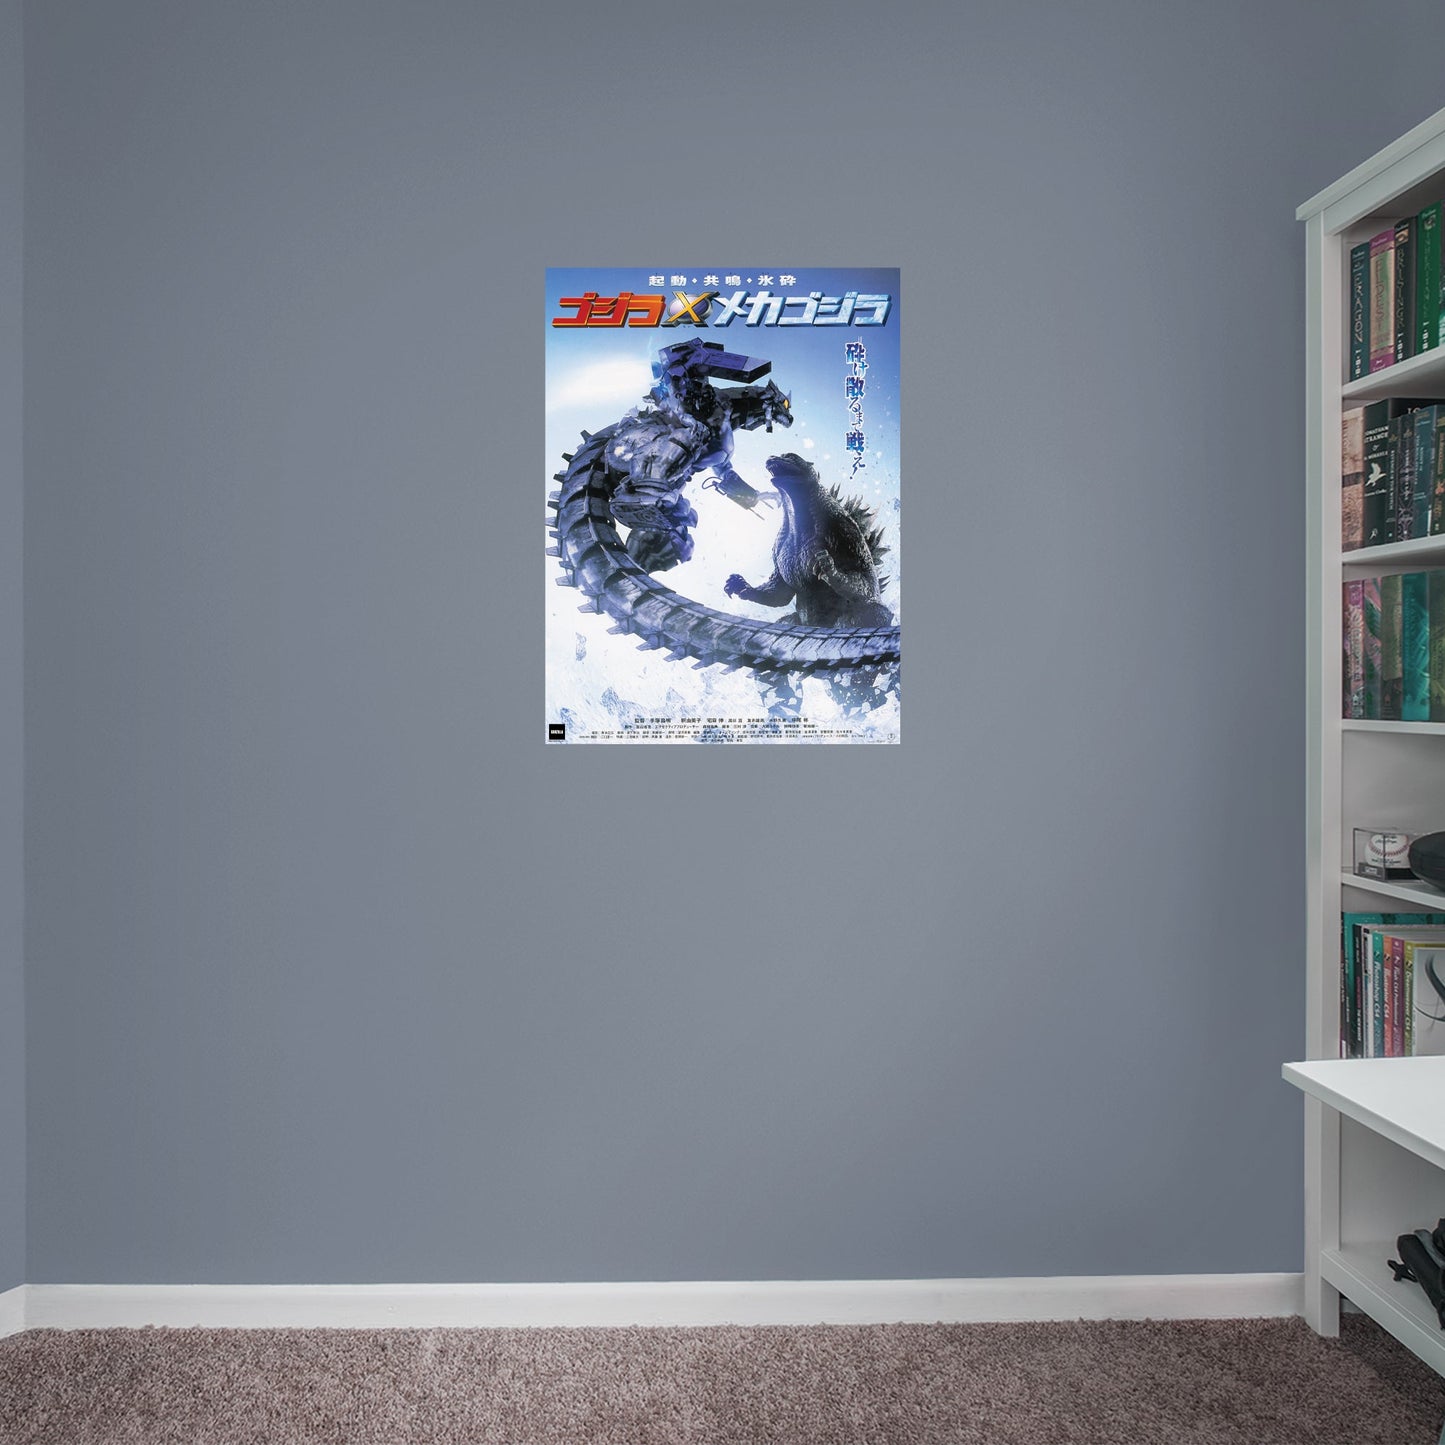 Godzilla: Godzilla Against Mechagodzilla (2002) Movie Poster Mural - Officially Licensed Toho Removable Adhesive Decal